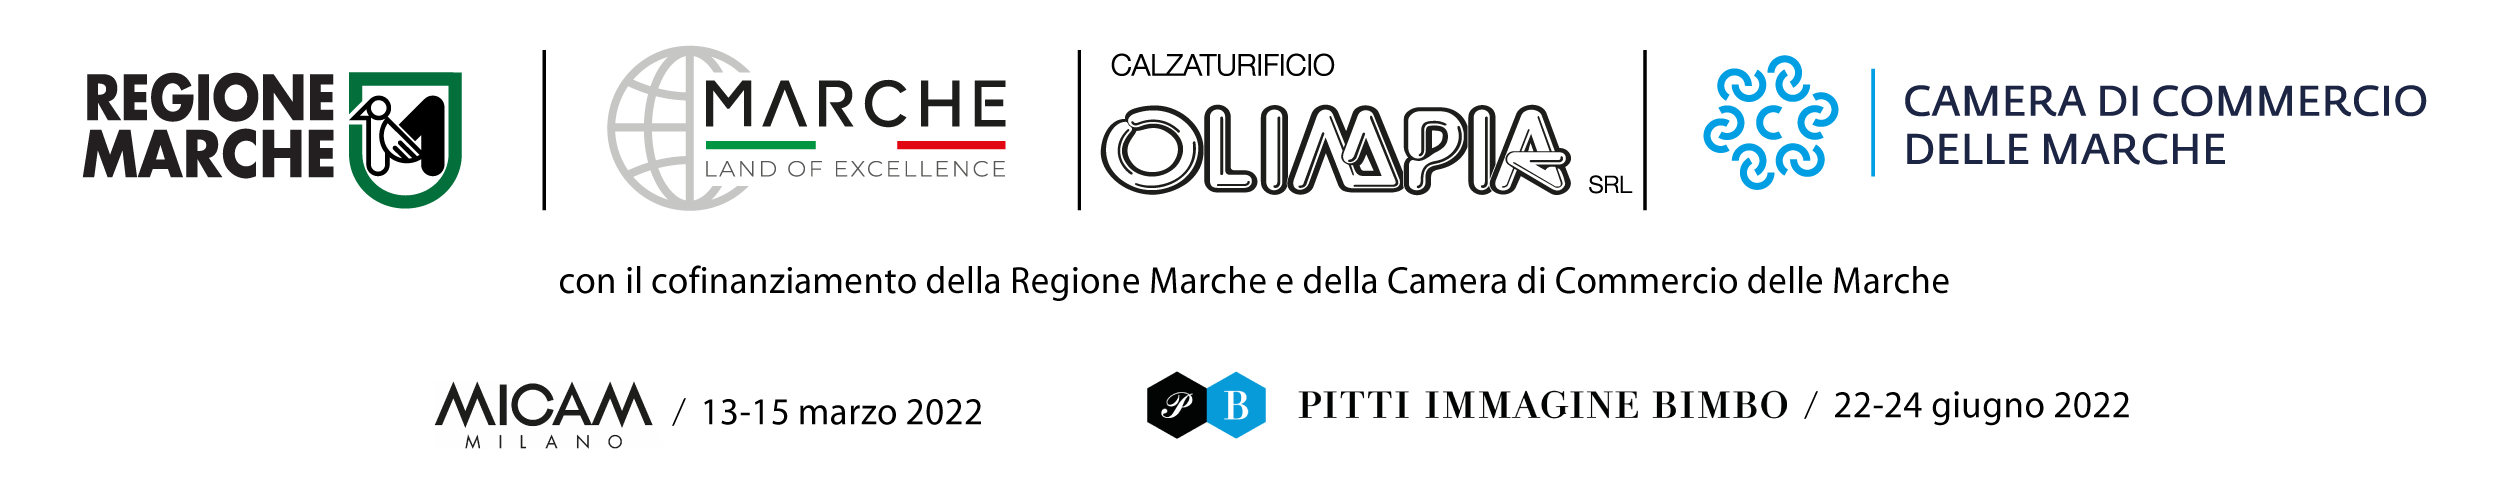 Banner_Regione_Marche